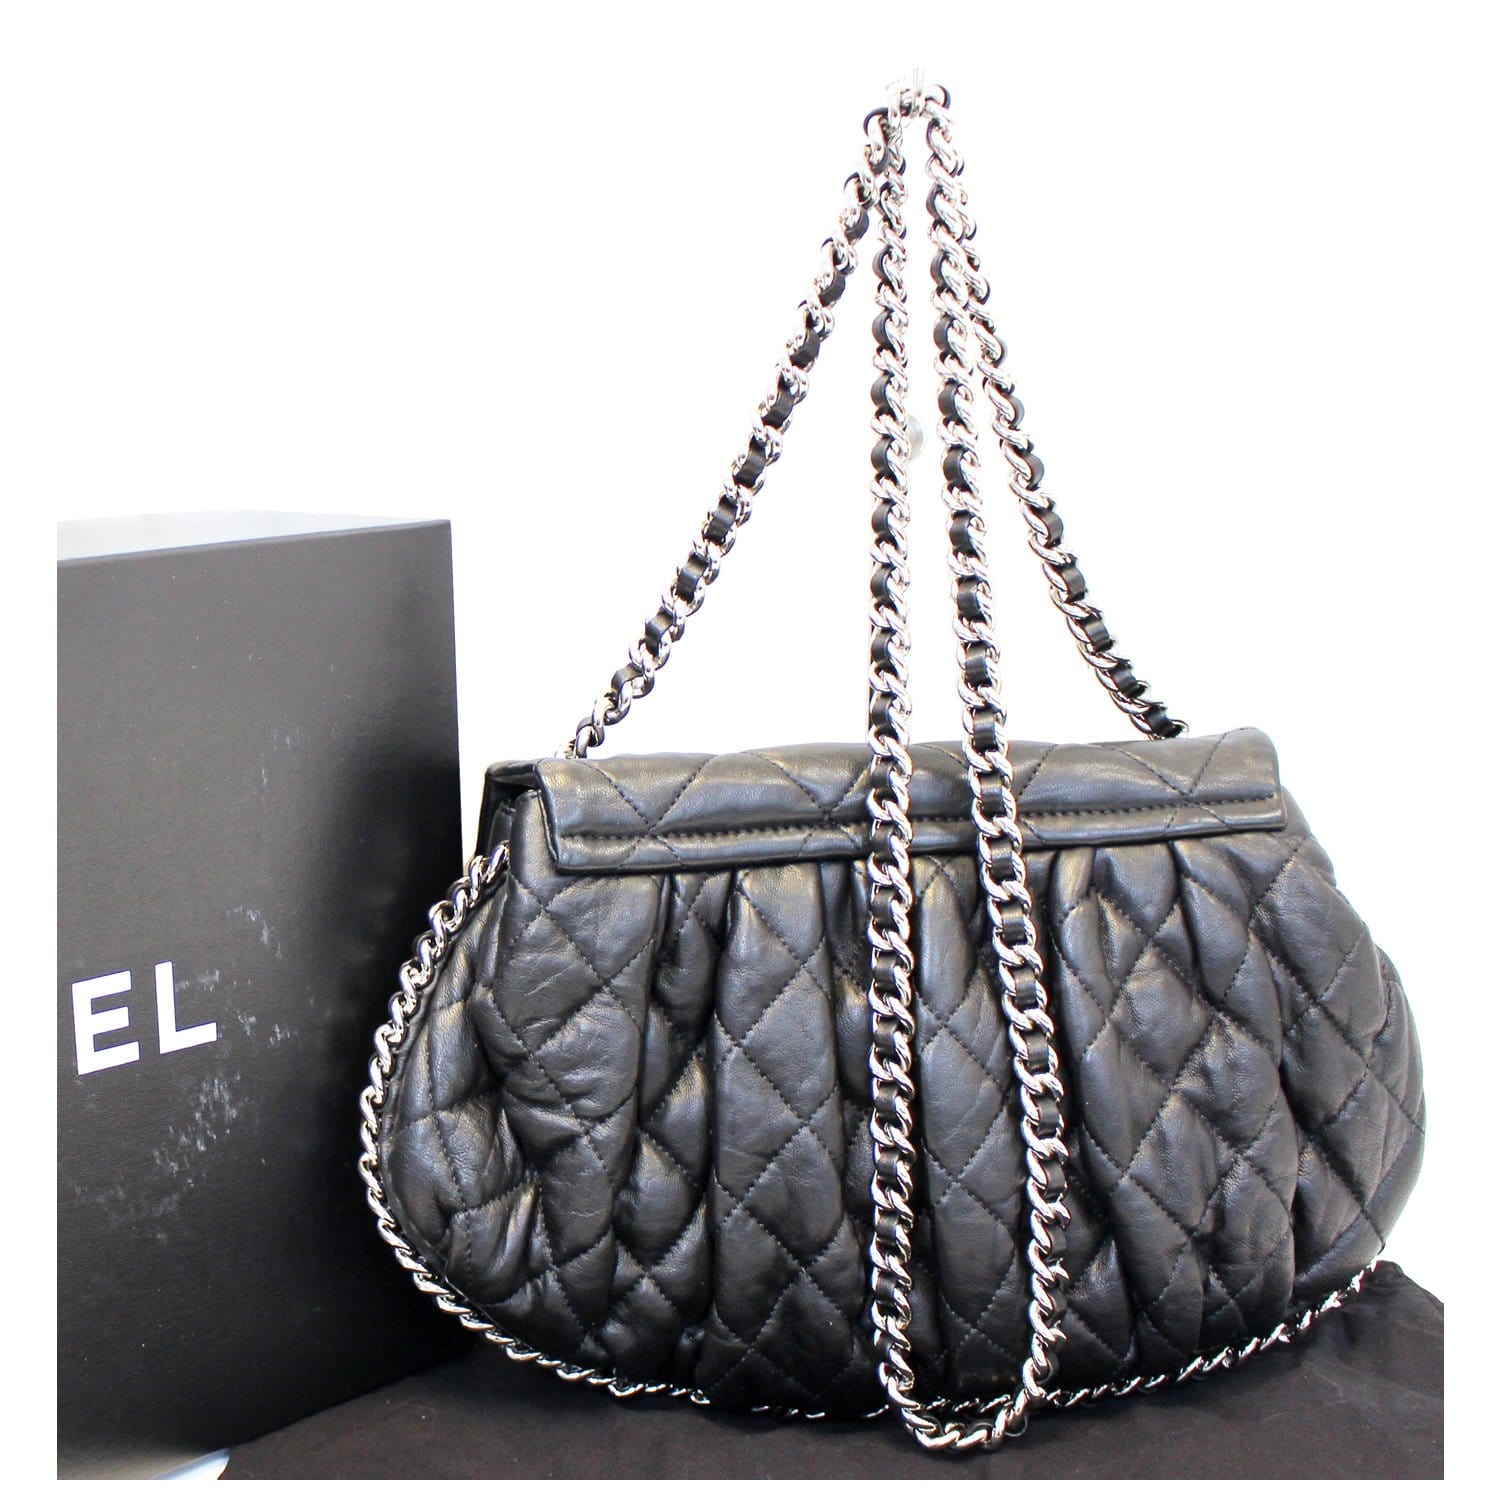 Chanel Chain Around Crossbody Messenger Aged Lambskin Medium Bag in Black